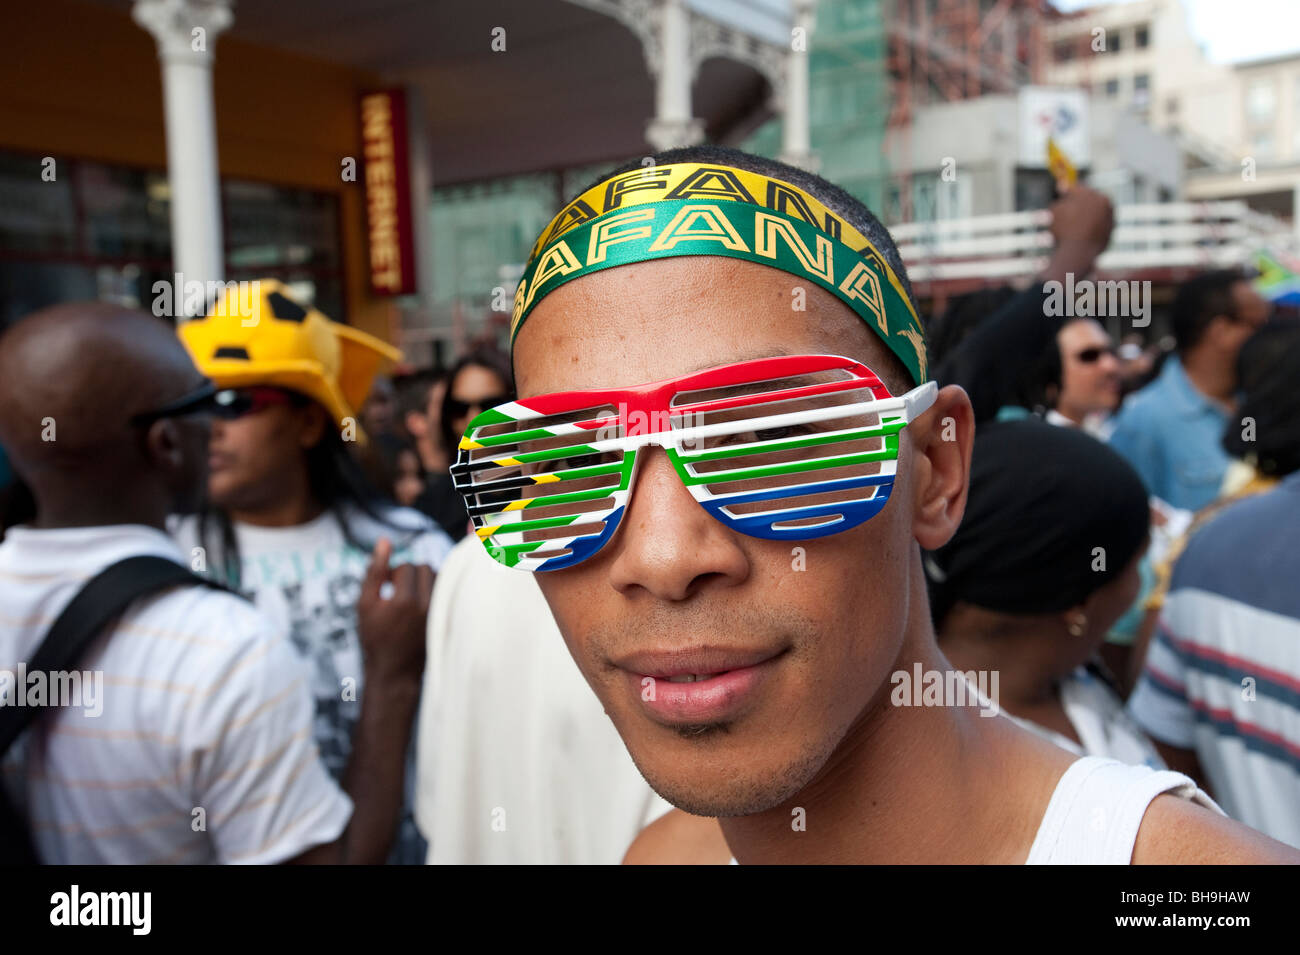 Fußball-Fan mit südafrikanischen Flagge Brille FIFA Fan-Meile in Cape Town, South Africa Stockfoto